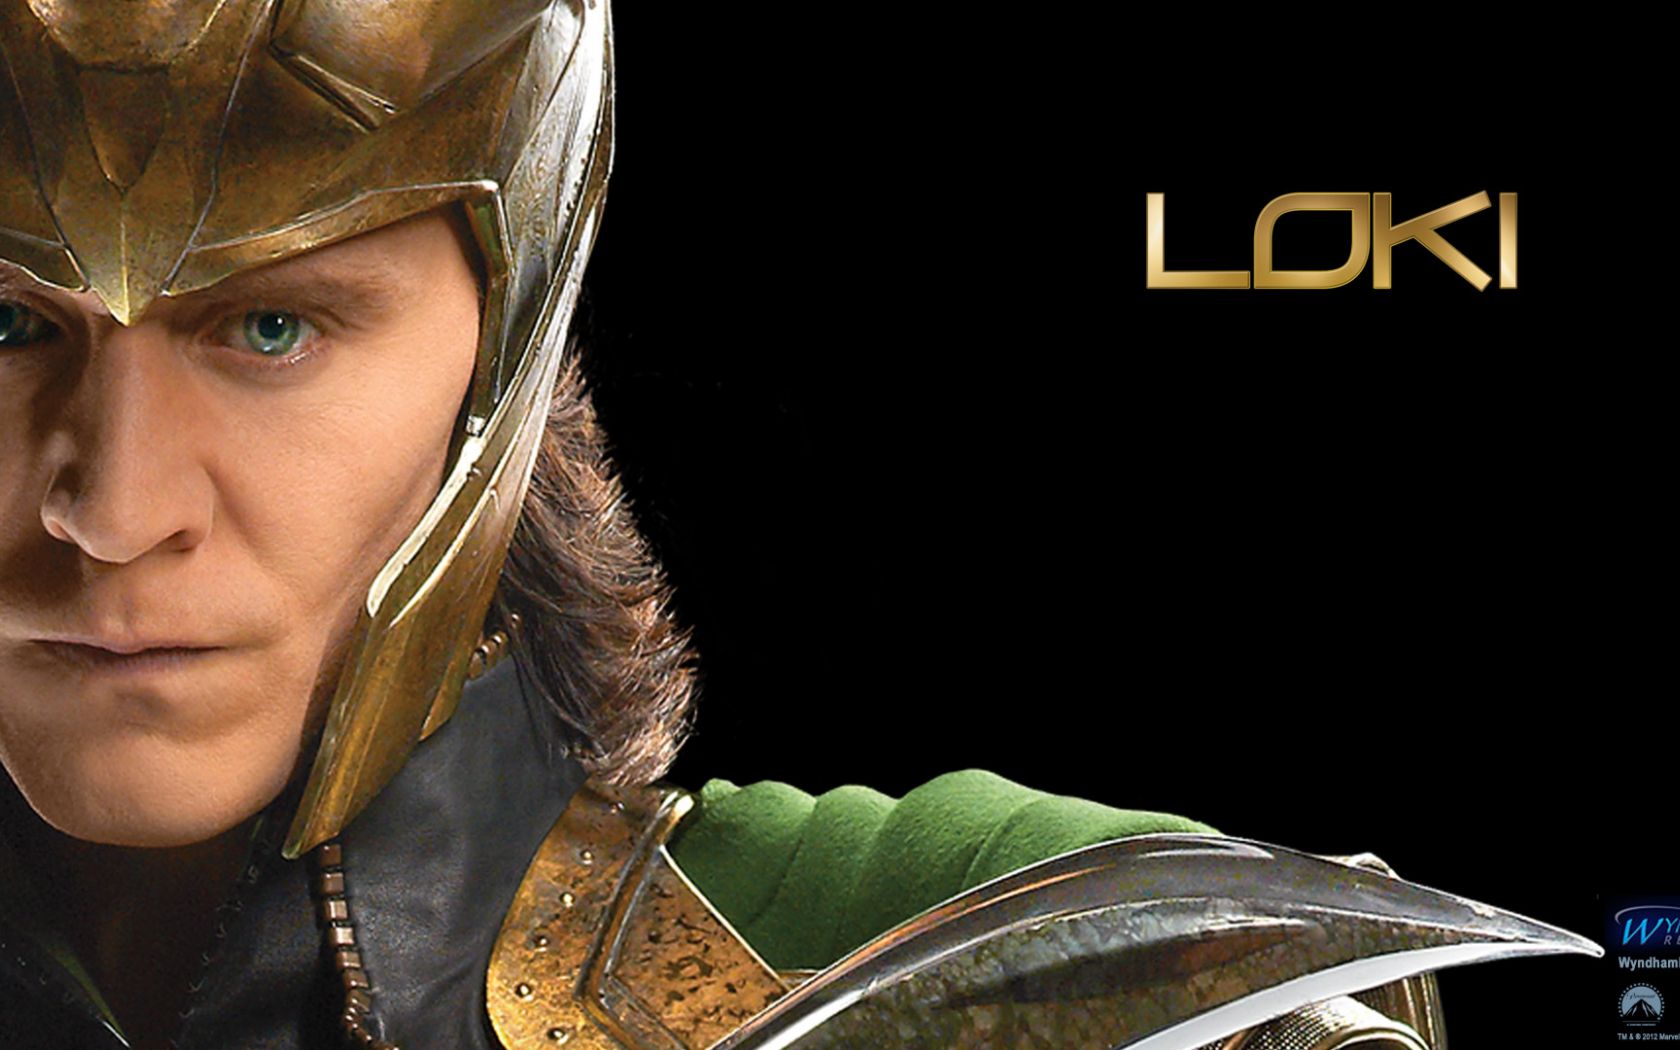 Free download Loki wallpaper Loki background [1920x1080] for your Desktop, Mobile & Tablet. Explore Loki Desktop Wallpaper. Loki Wallpaper HD, Tom Hiddleston Wallpaper, Thor and Loki Wallpaper